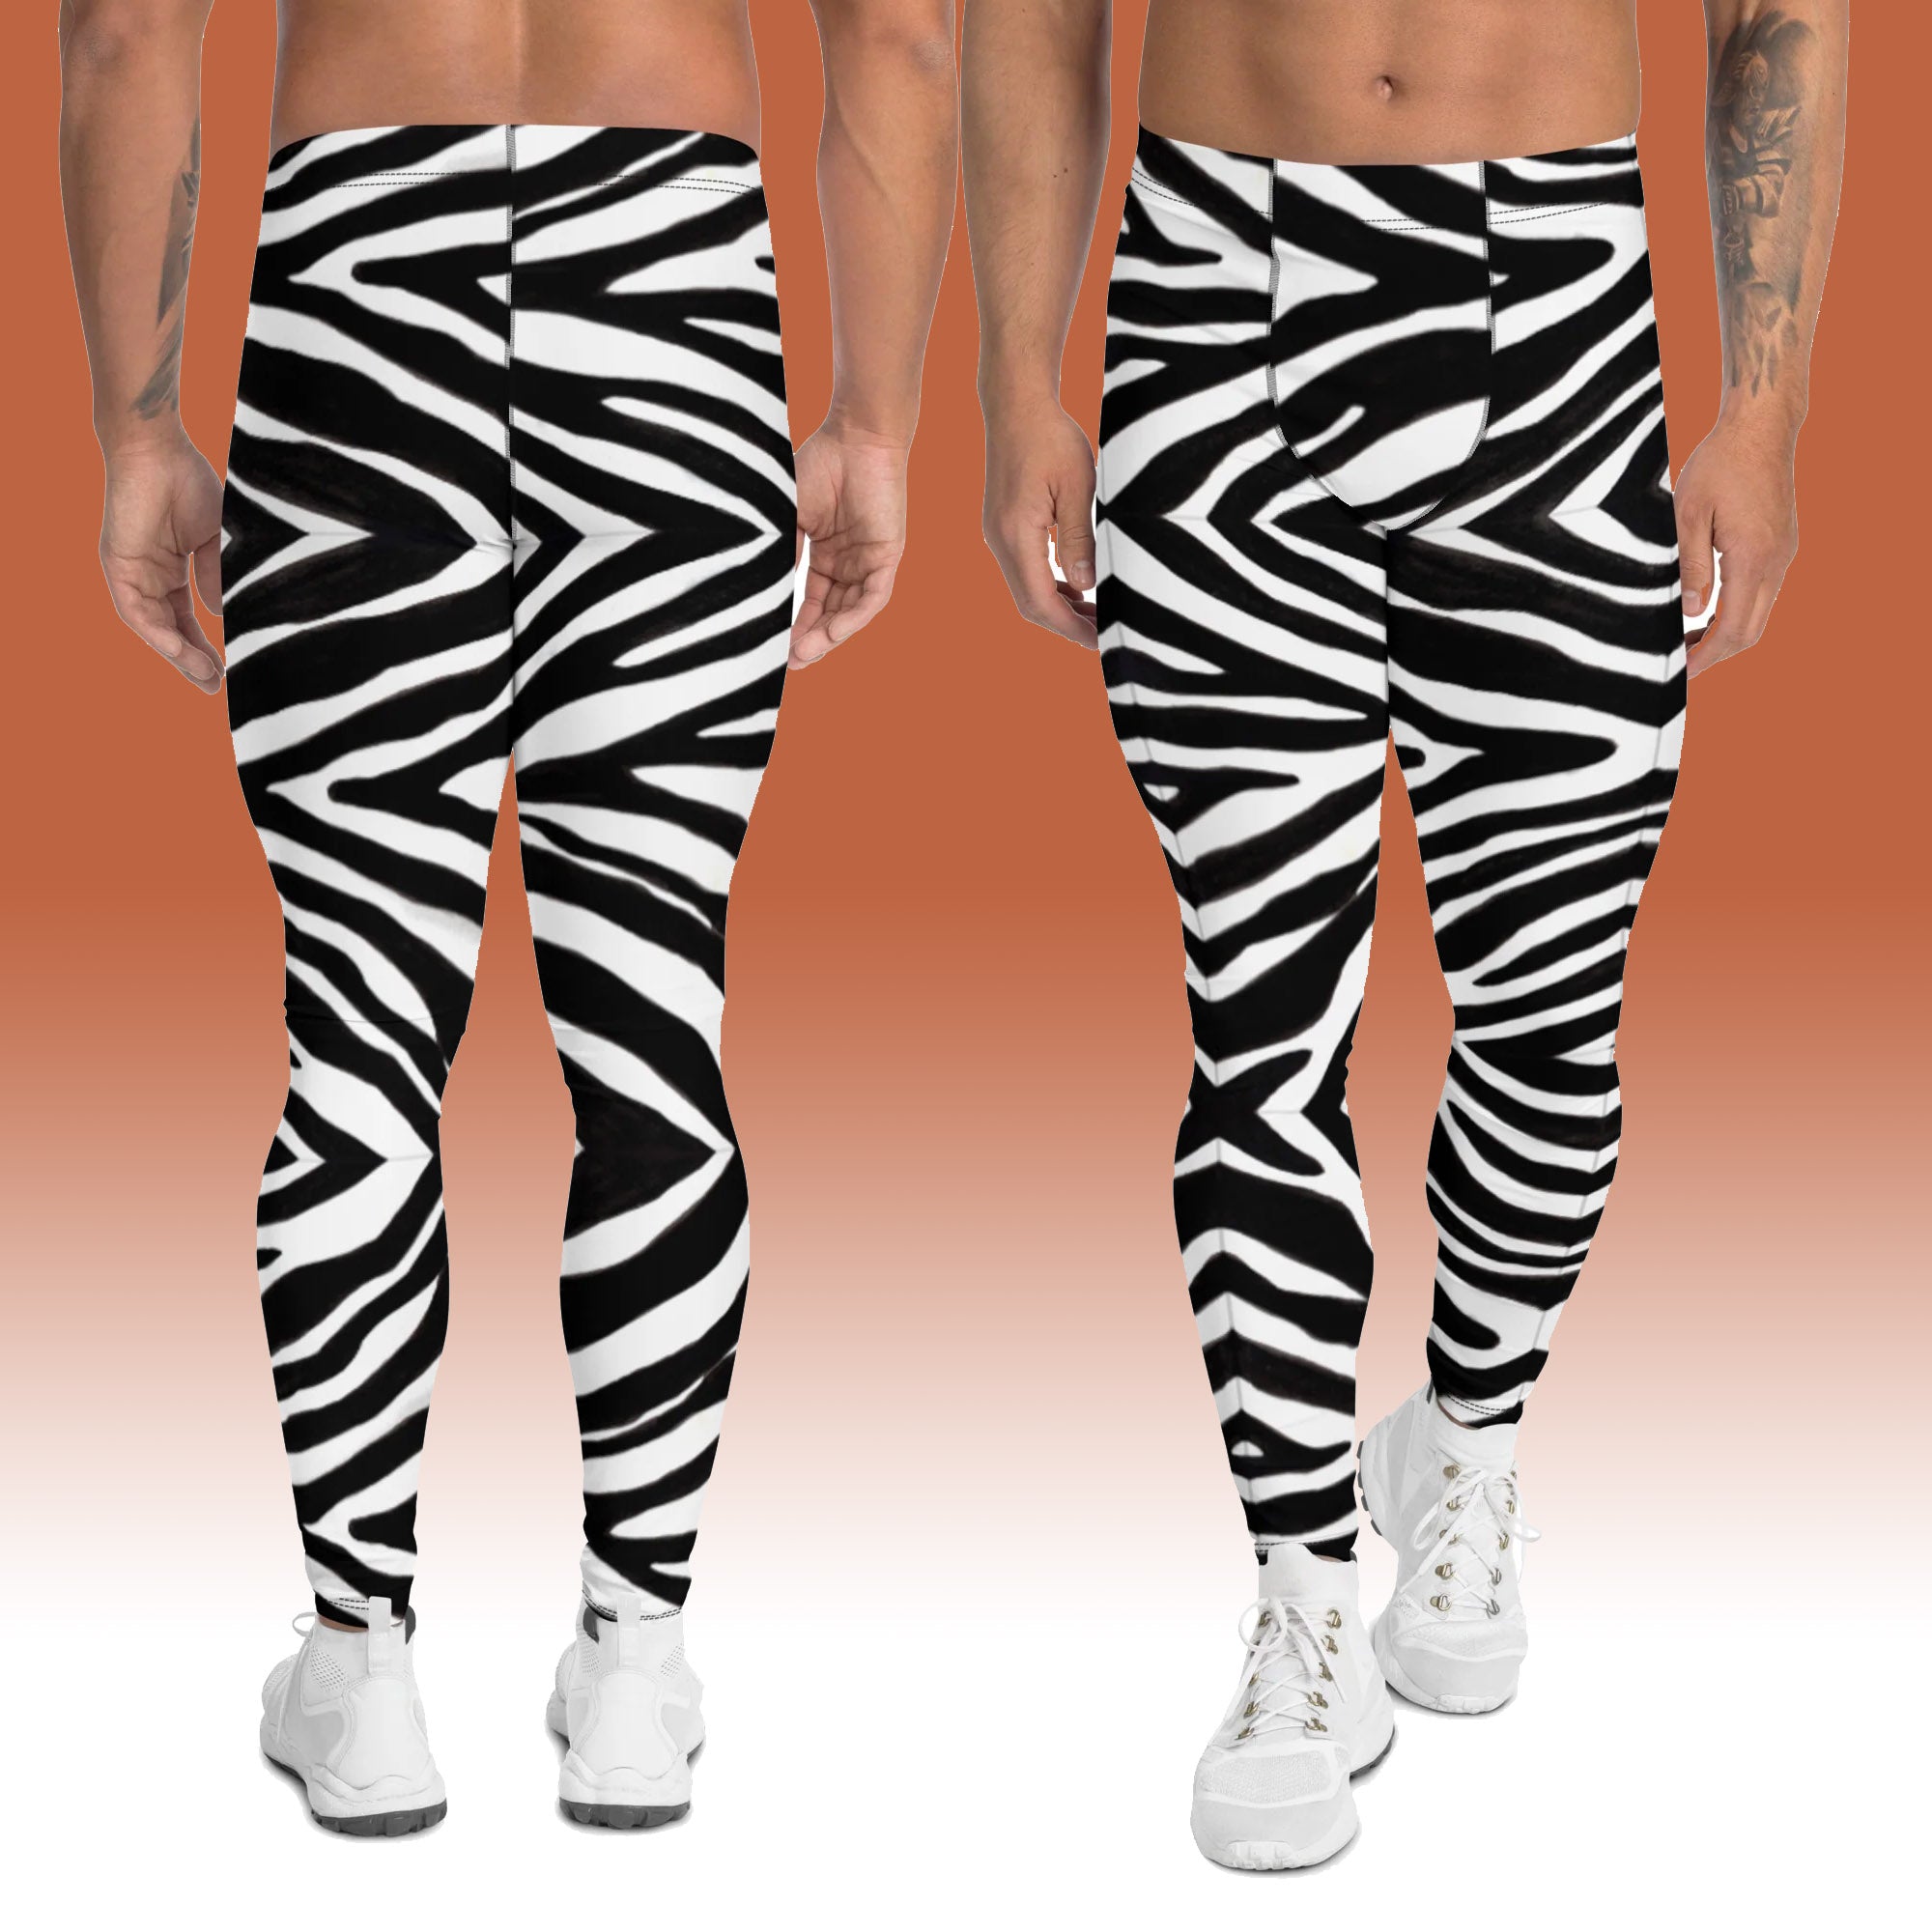 LuLaRoe Zebra Active Pants, Tights & Leggings